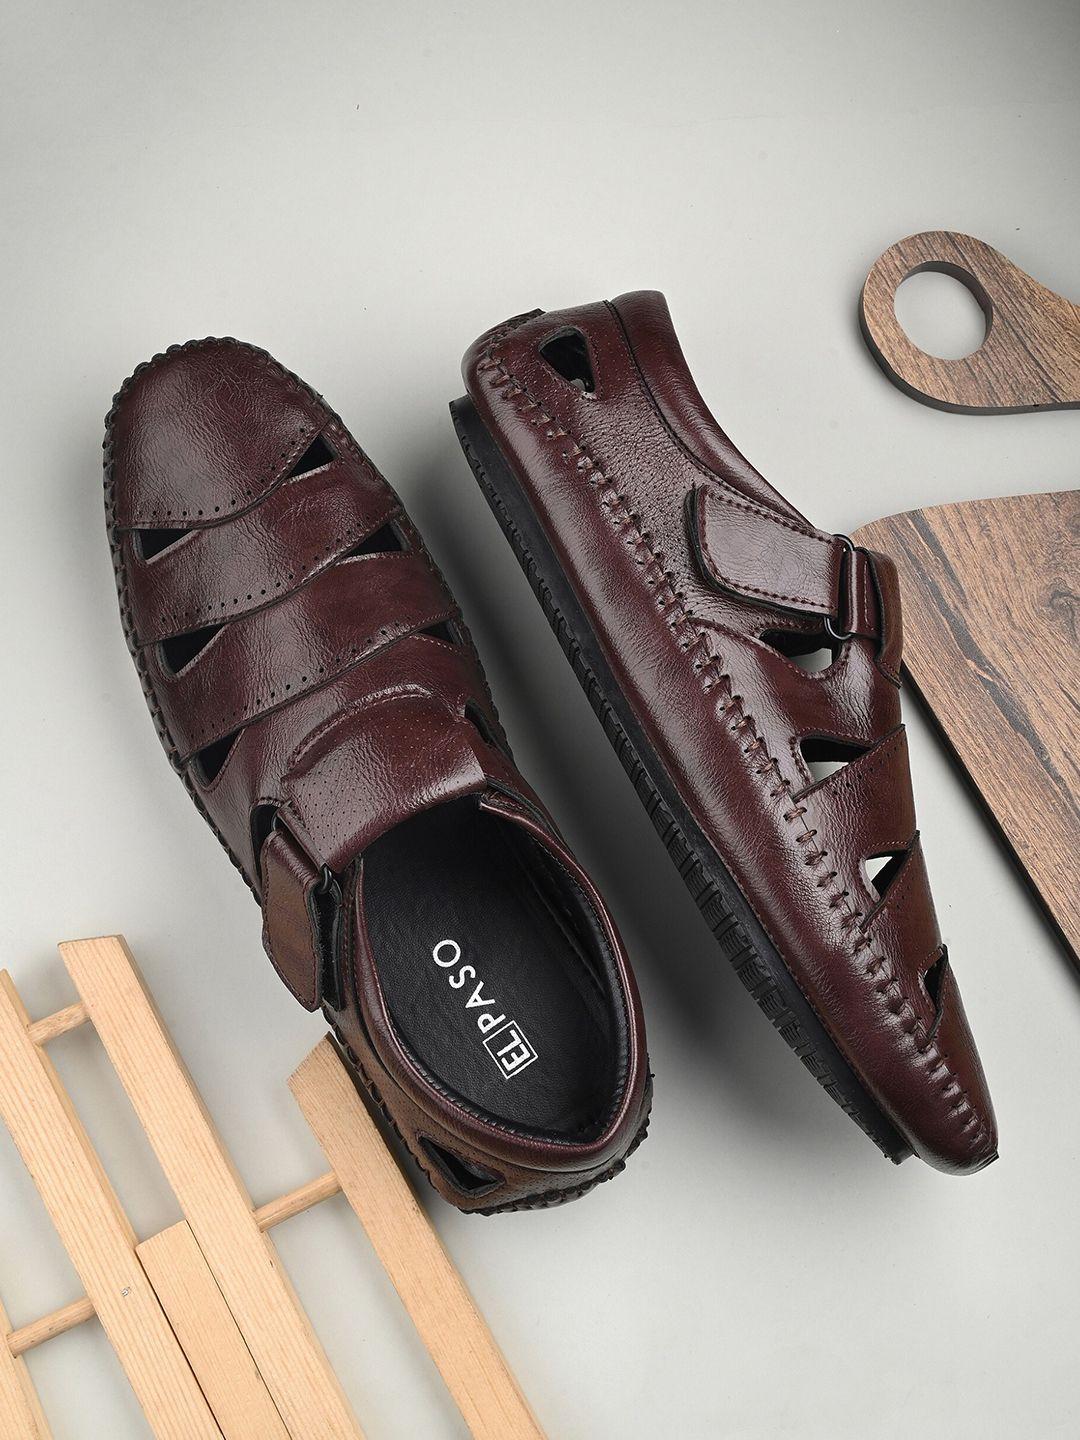 el-paso-men-textured-ethnic-shoe-style-sandals